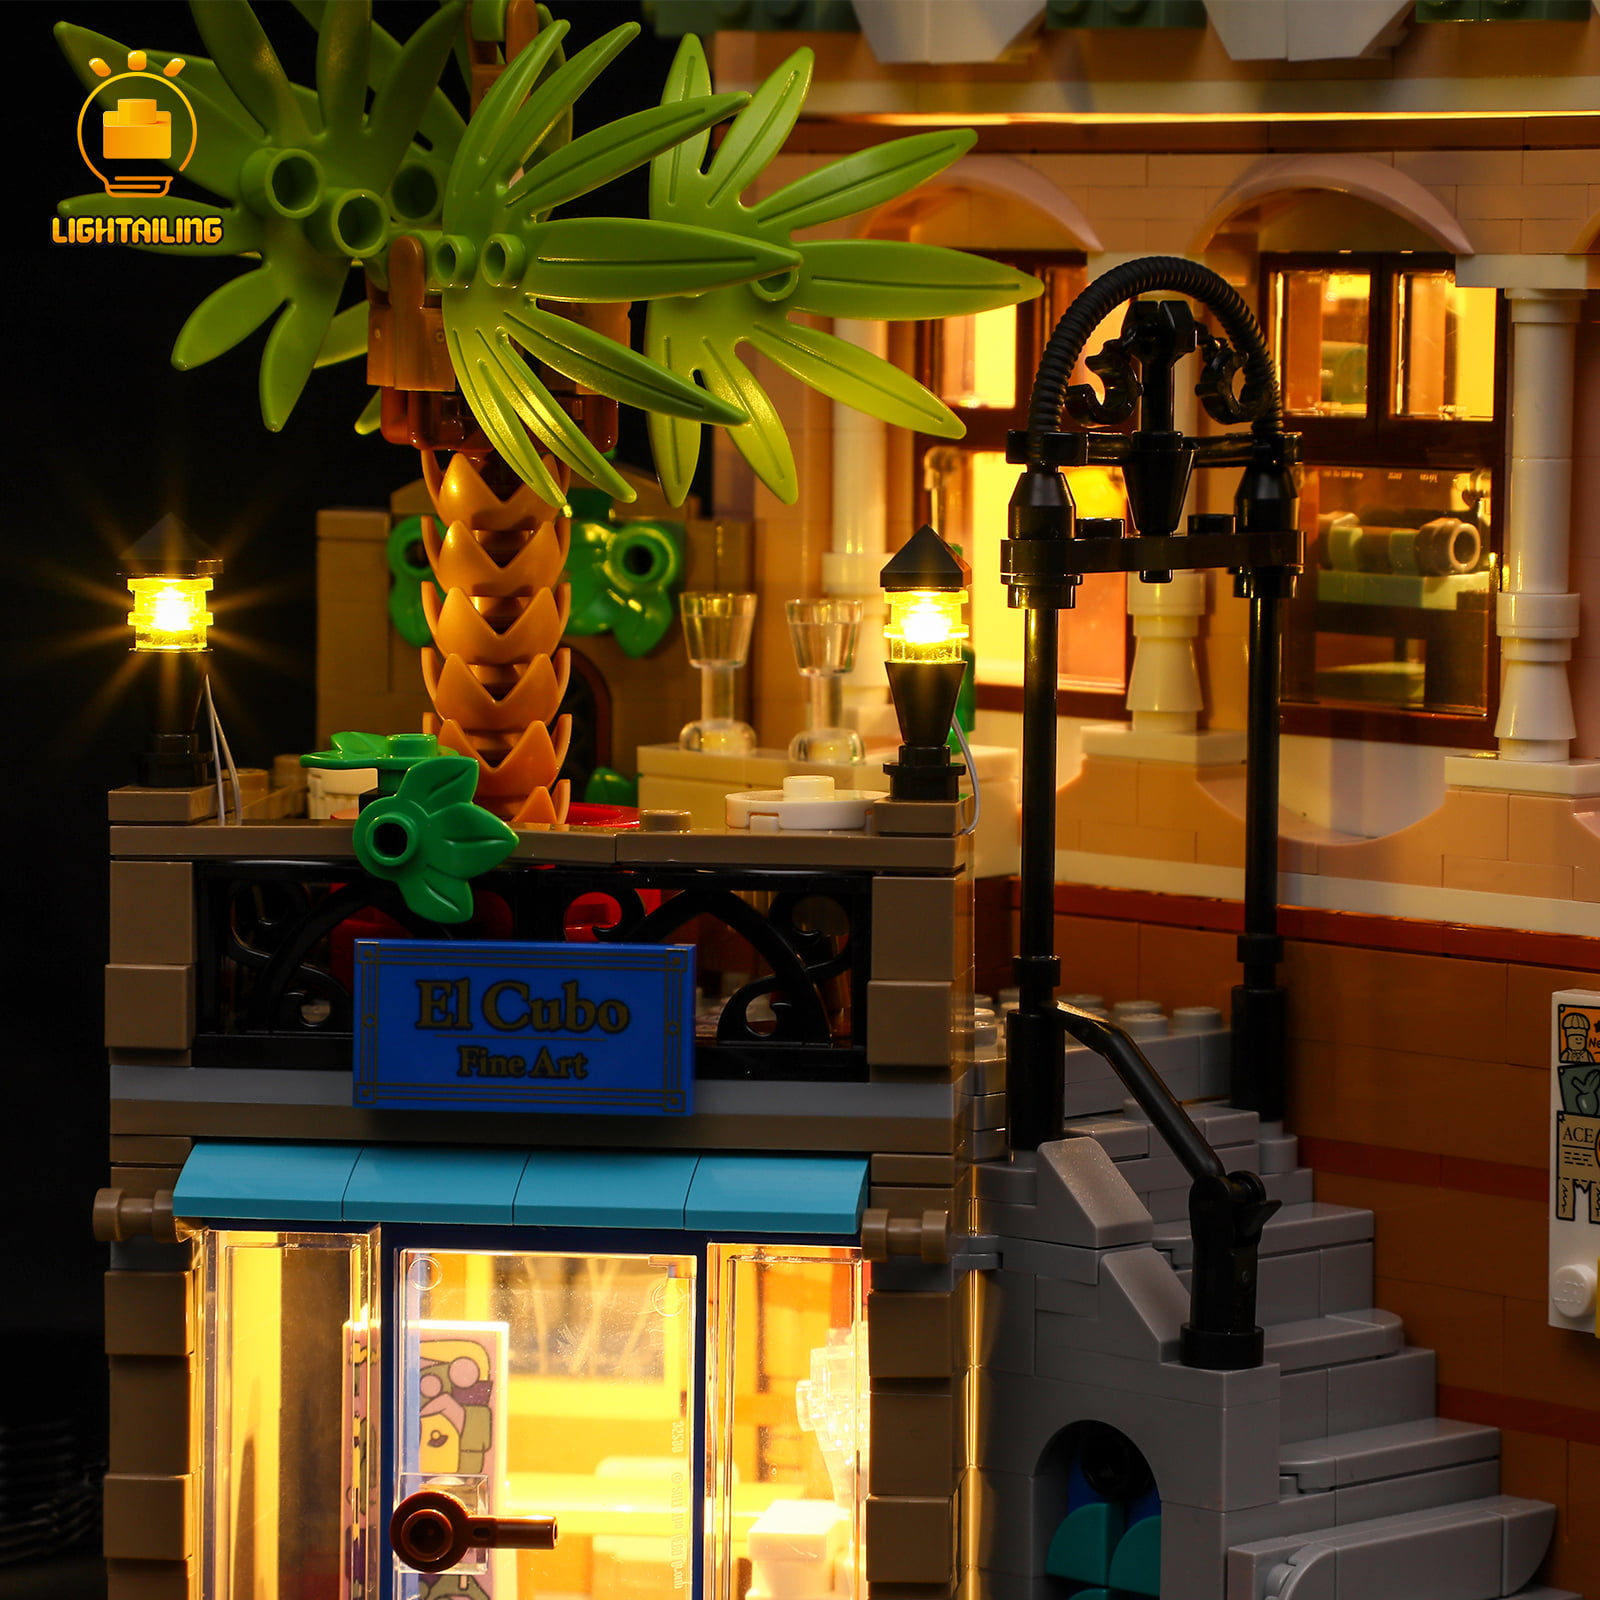 NOT Included The Model Set Lightailing Led Light for Lego 10297 Boutique Hotel Building Blocks Model 